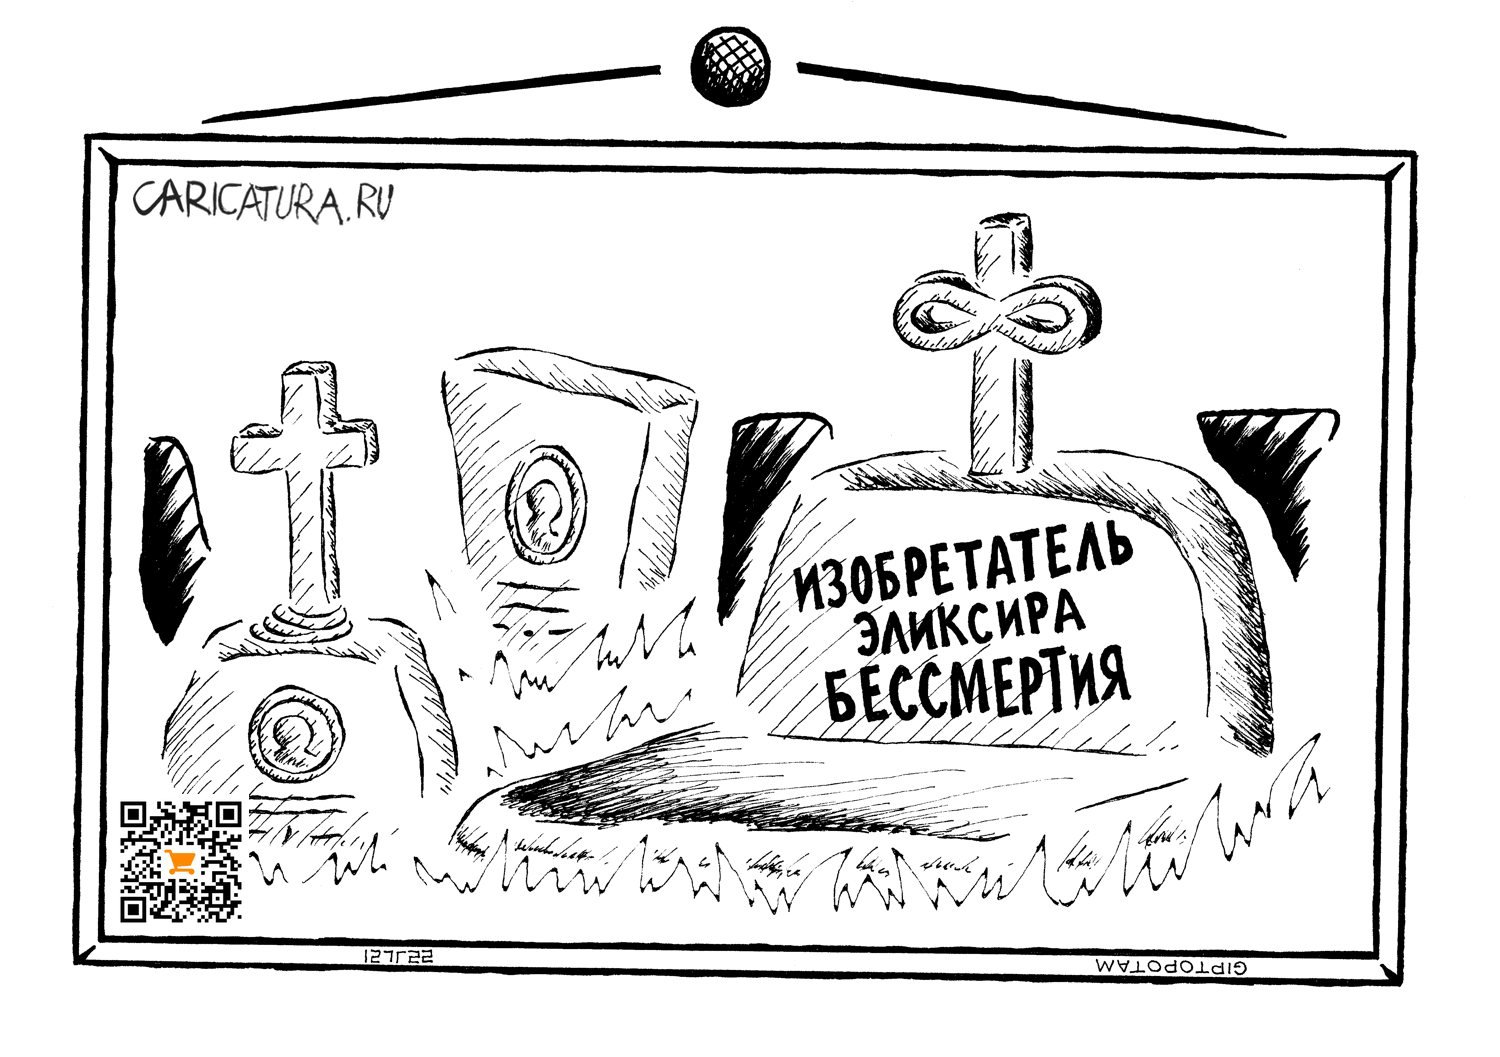 Карикатура "Пан или про...спал", Александр Евангелистов